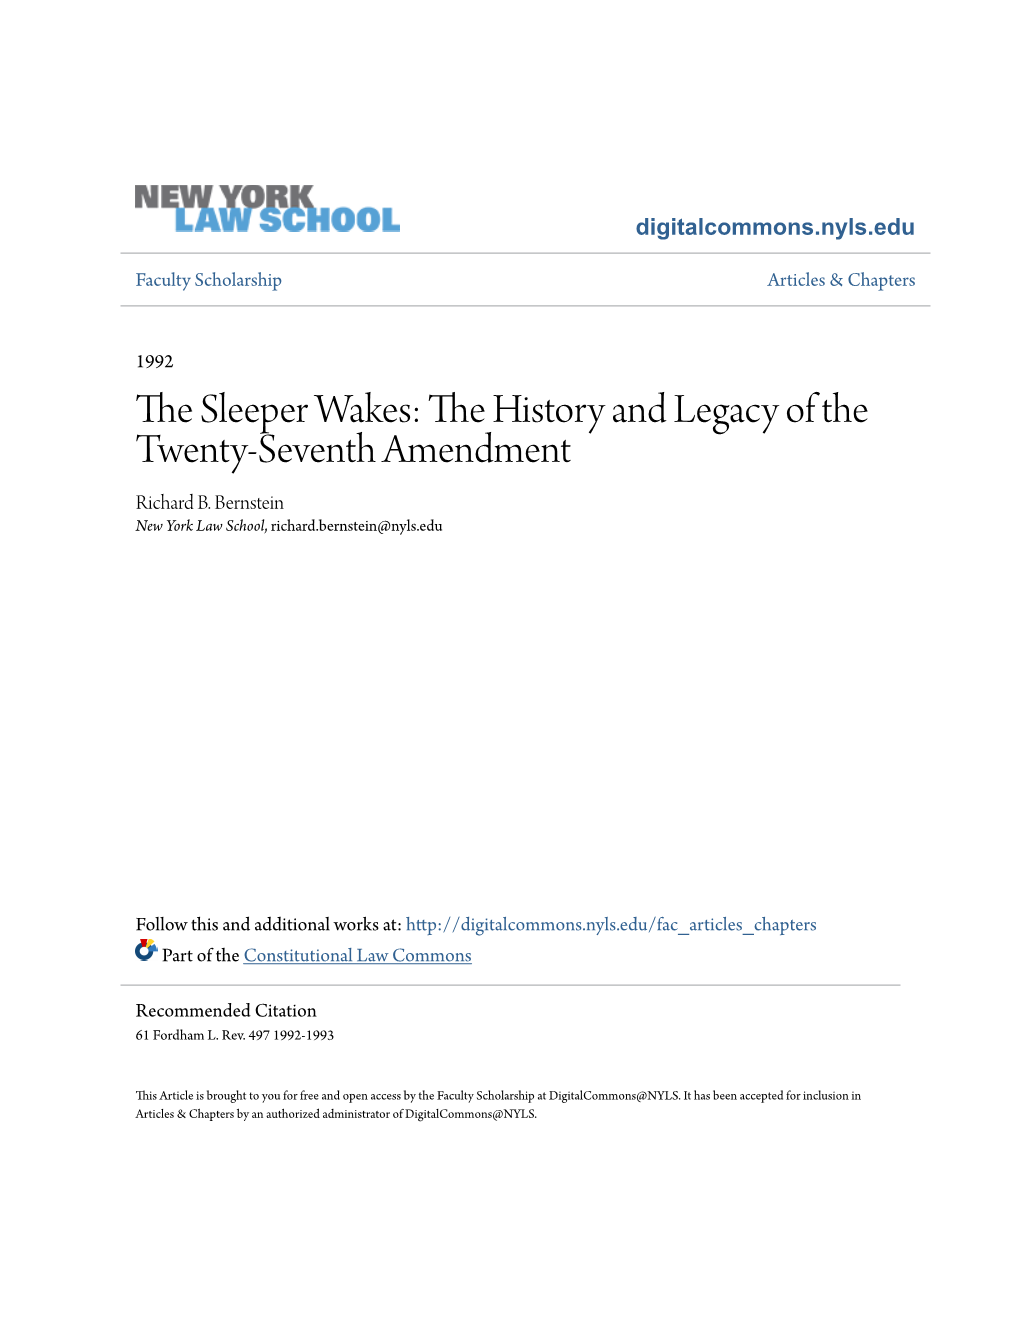 The History and Legacy of the Twenty-Seventh Amendment Richard B